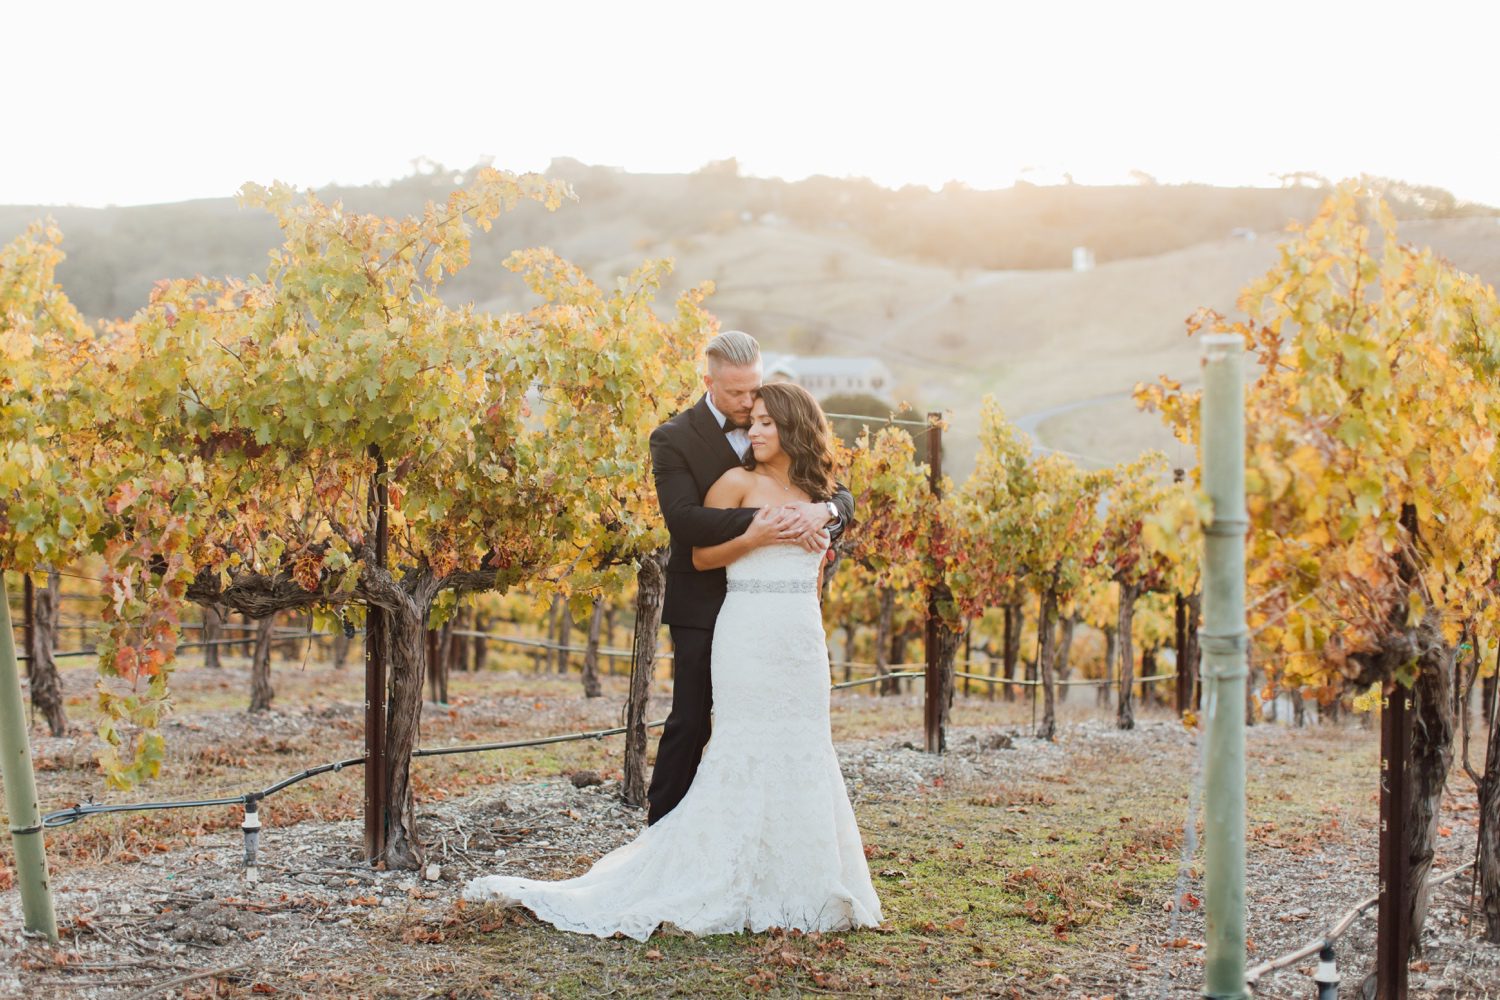 Bride and groom hugging in california vineyard with fall leaves